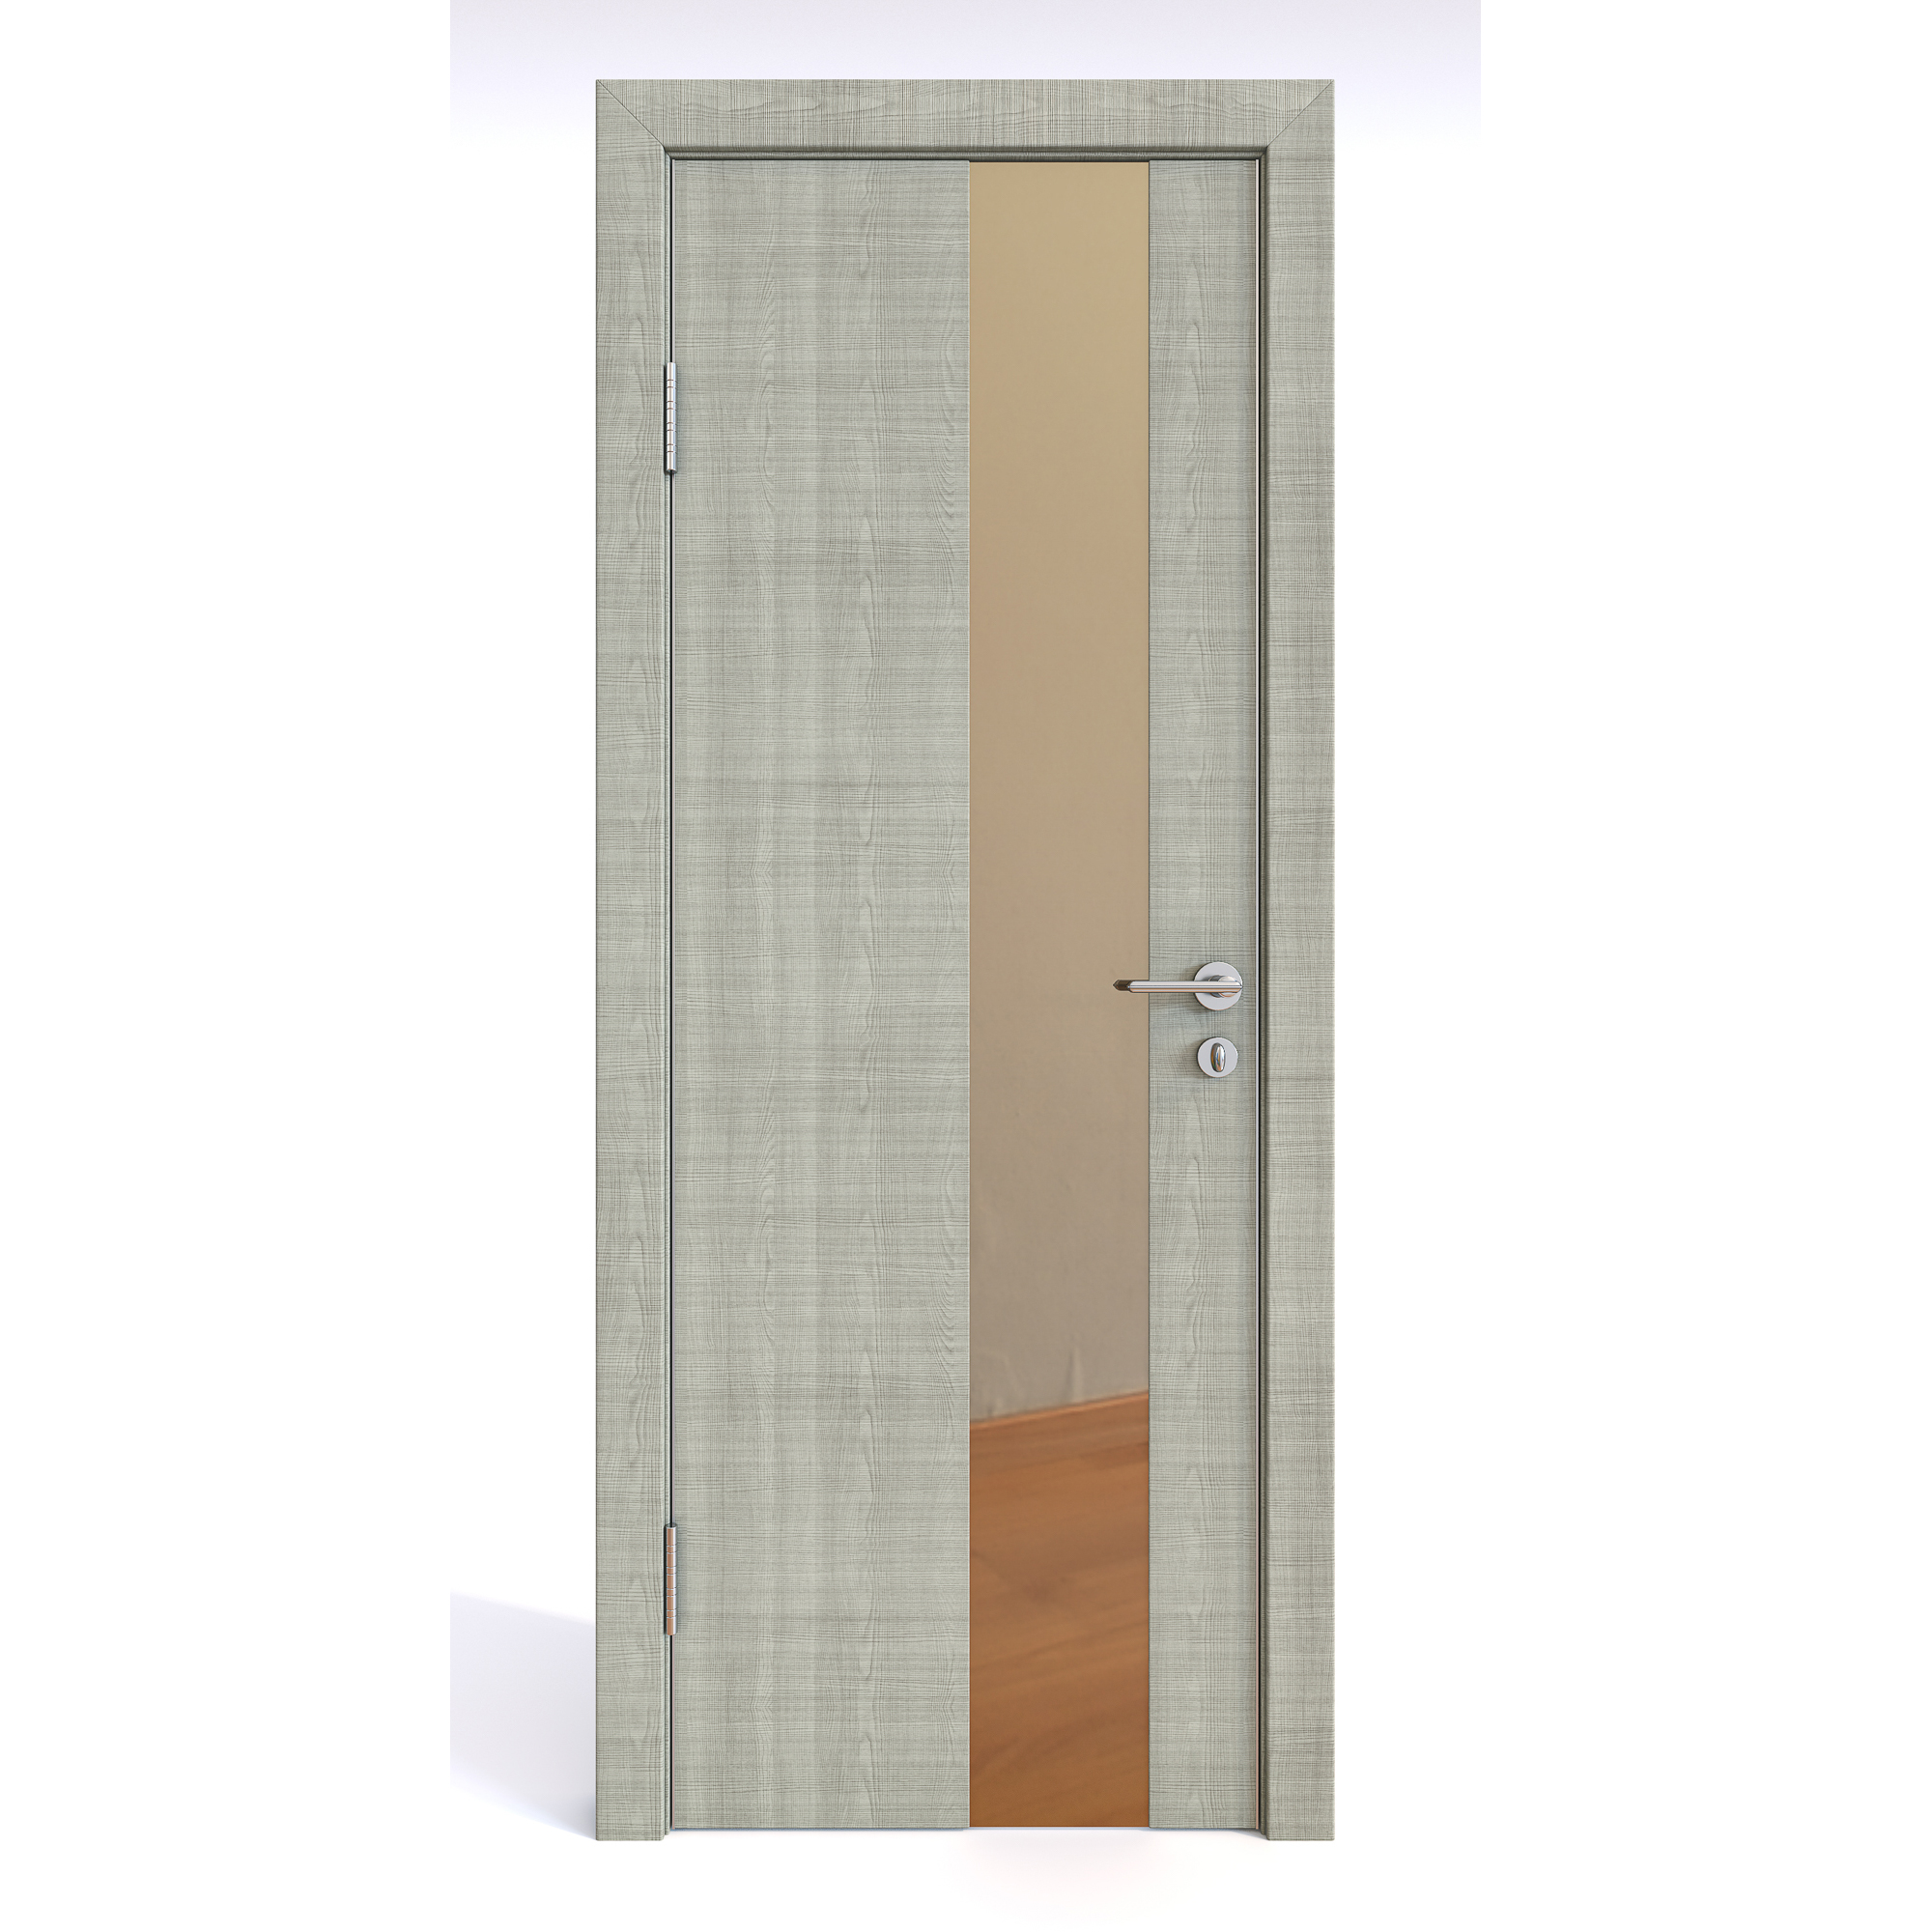 фото Межкомнатная дверь до-504 серый дуб/бронза 200х60 дверная линия